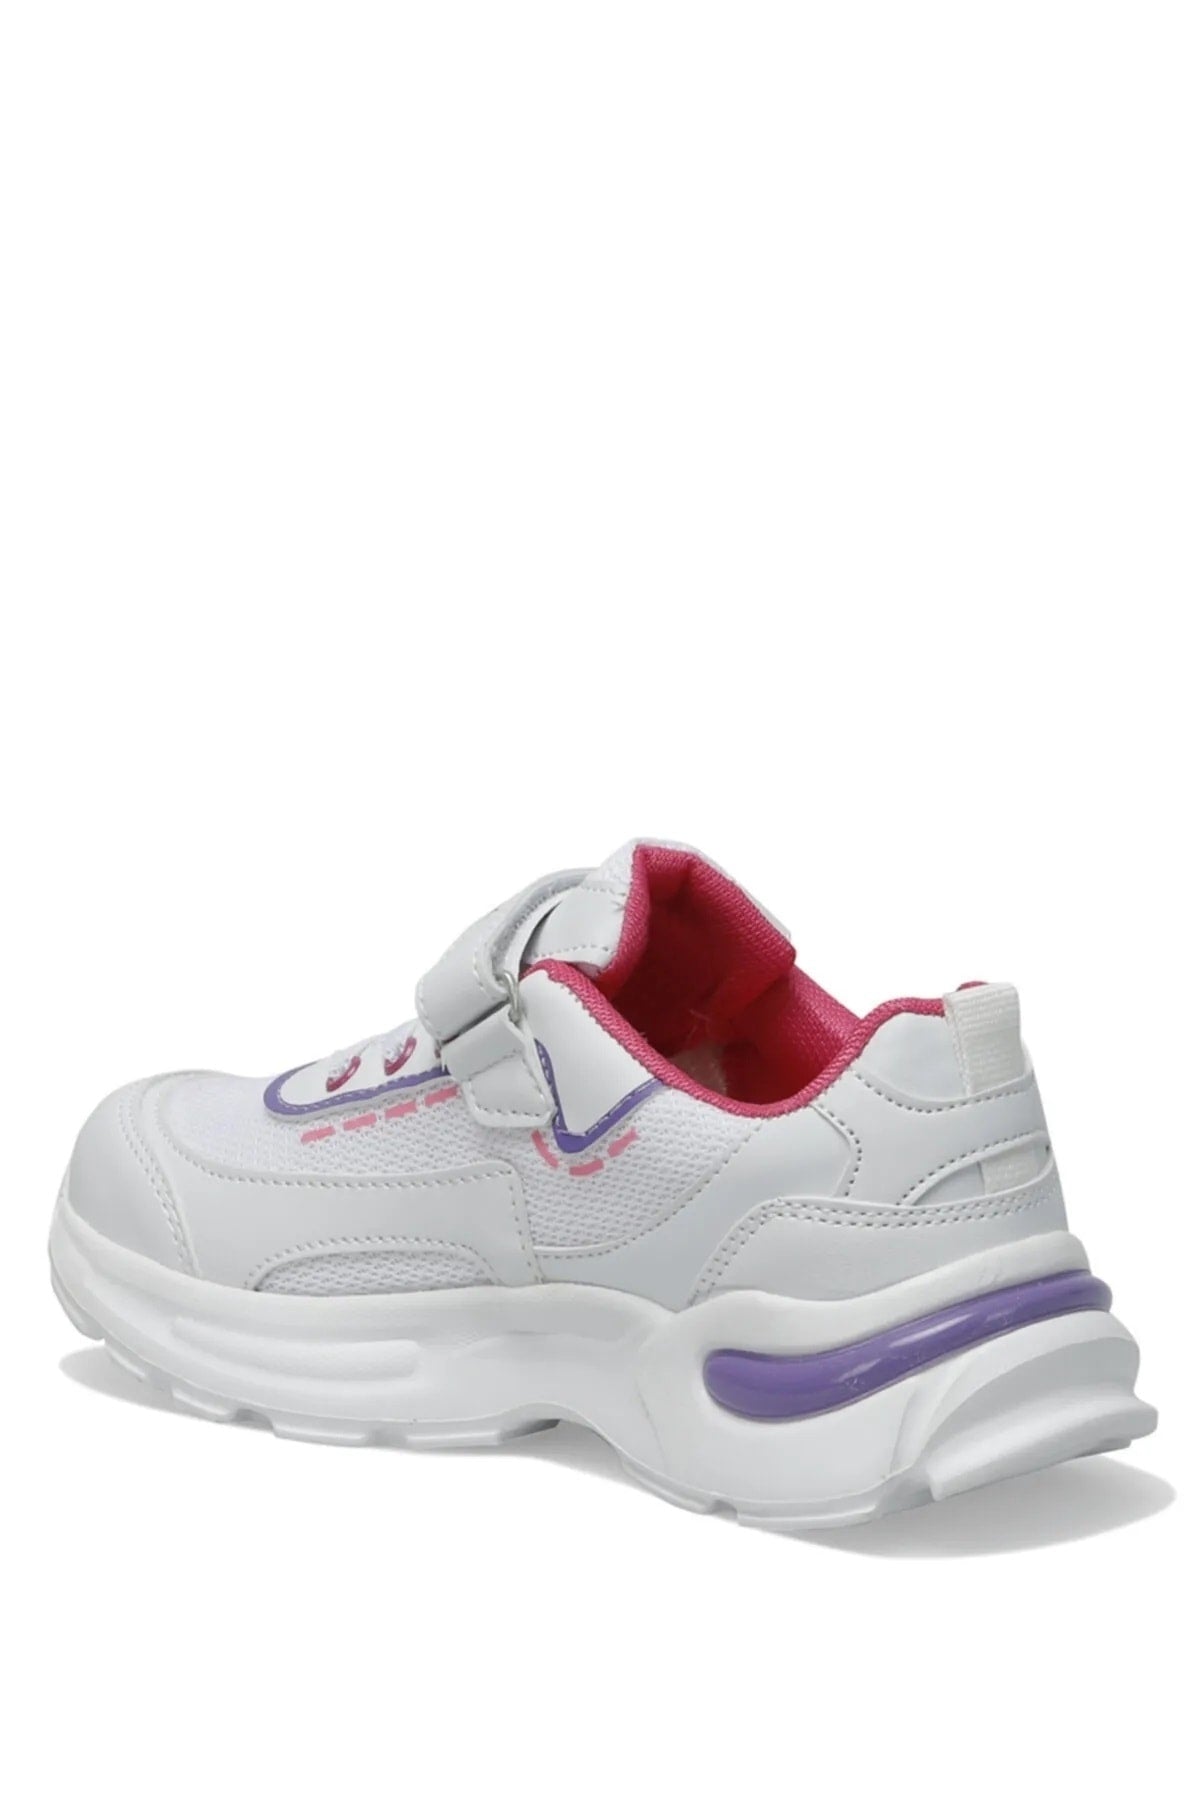 Nurse Jr 3fx White Girls Sneakers